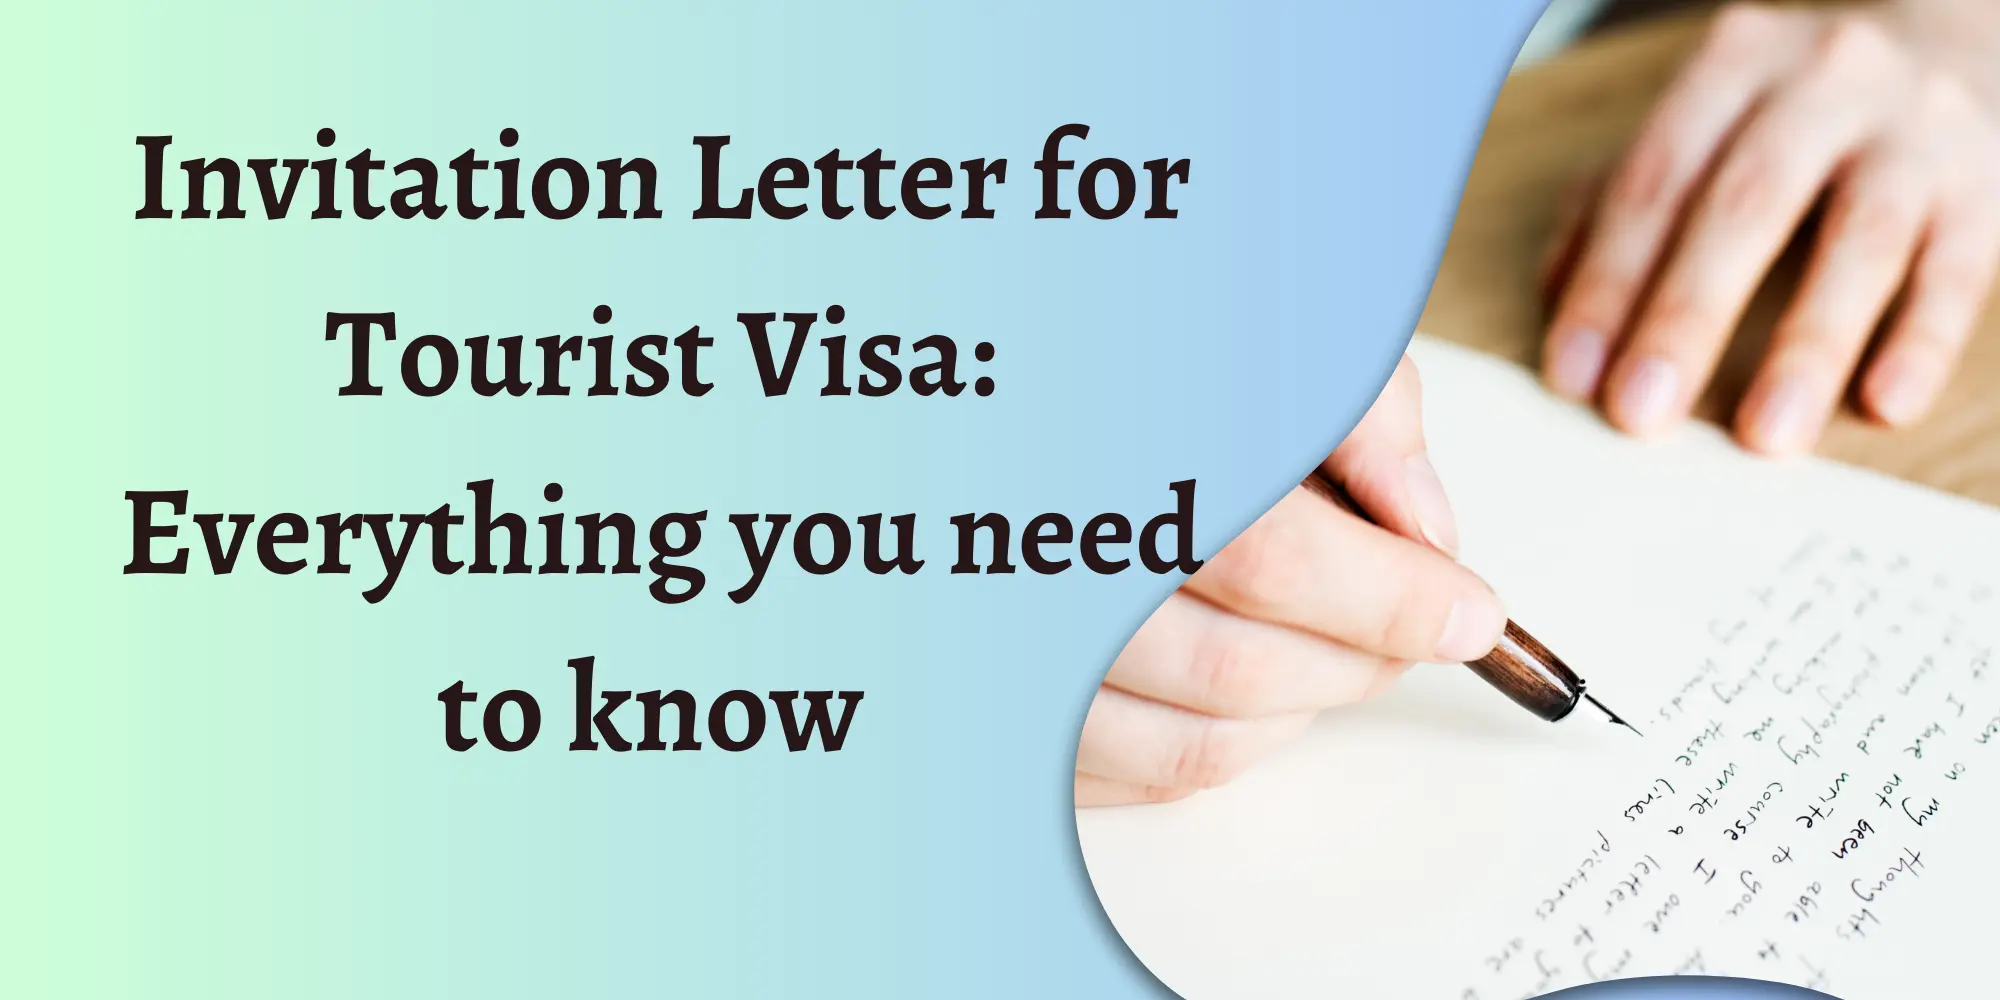 invitation letter for tourist visa image thumbnail